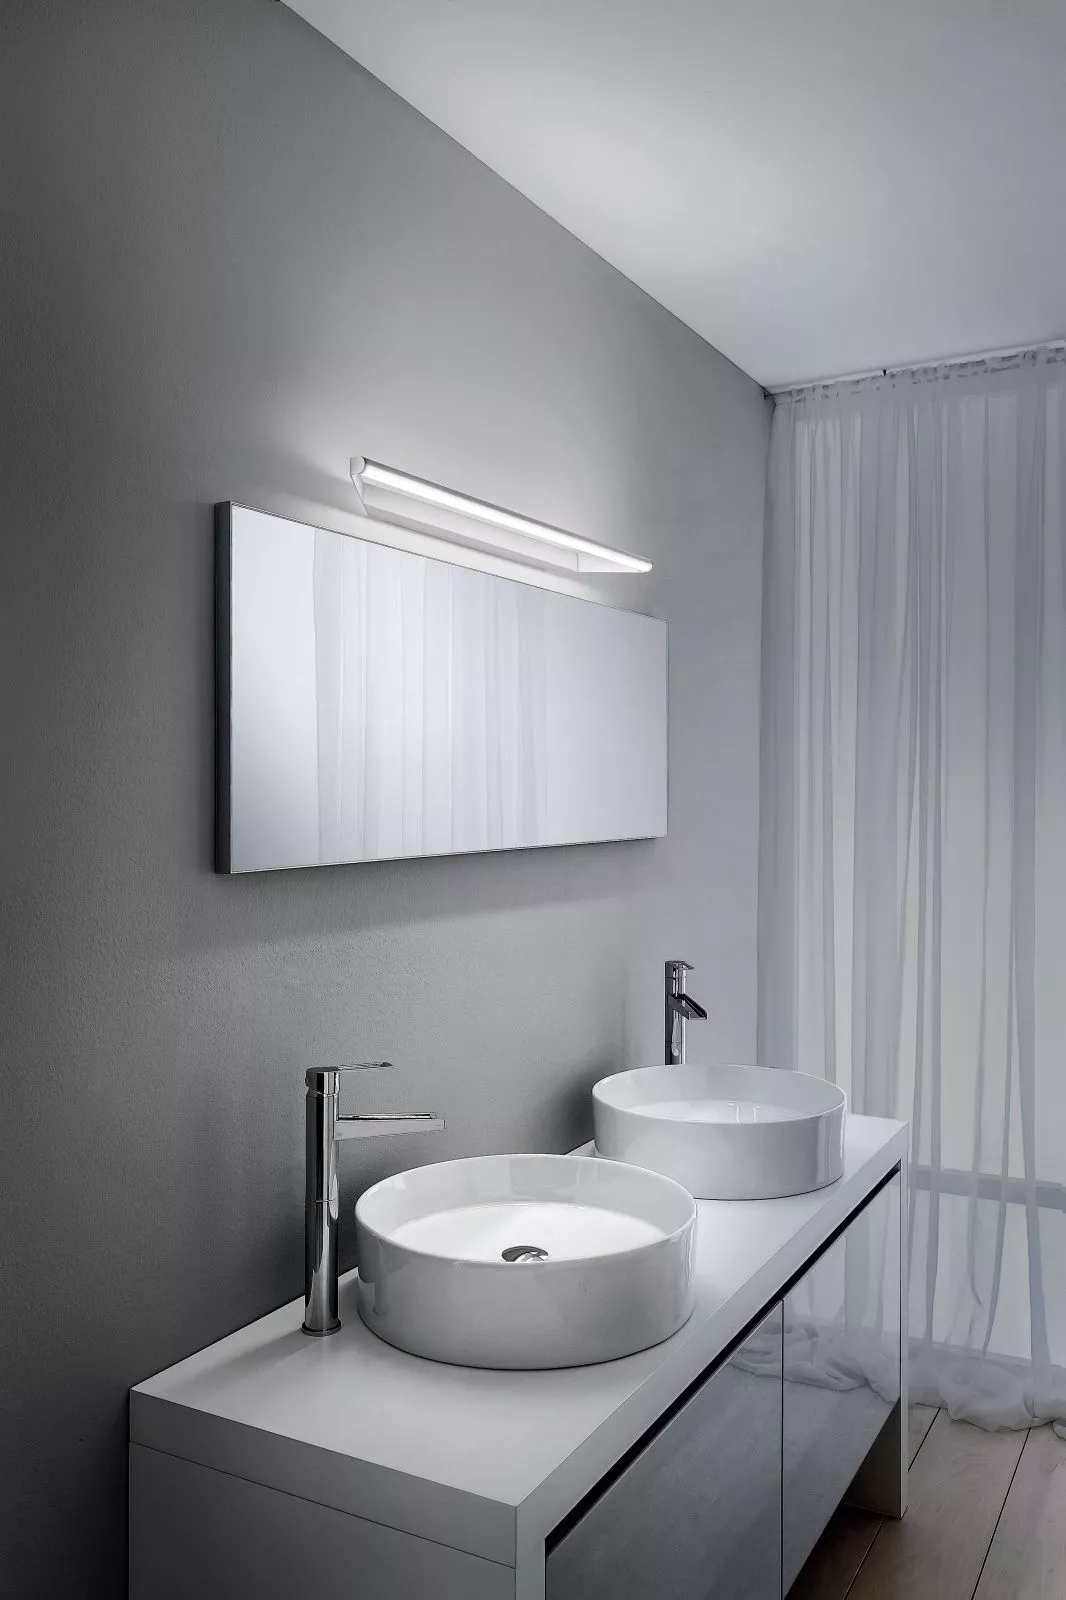 Applique per specchio bagno 62,9 circular linea light bianca 11w - 8409